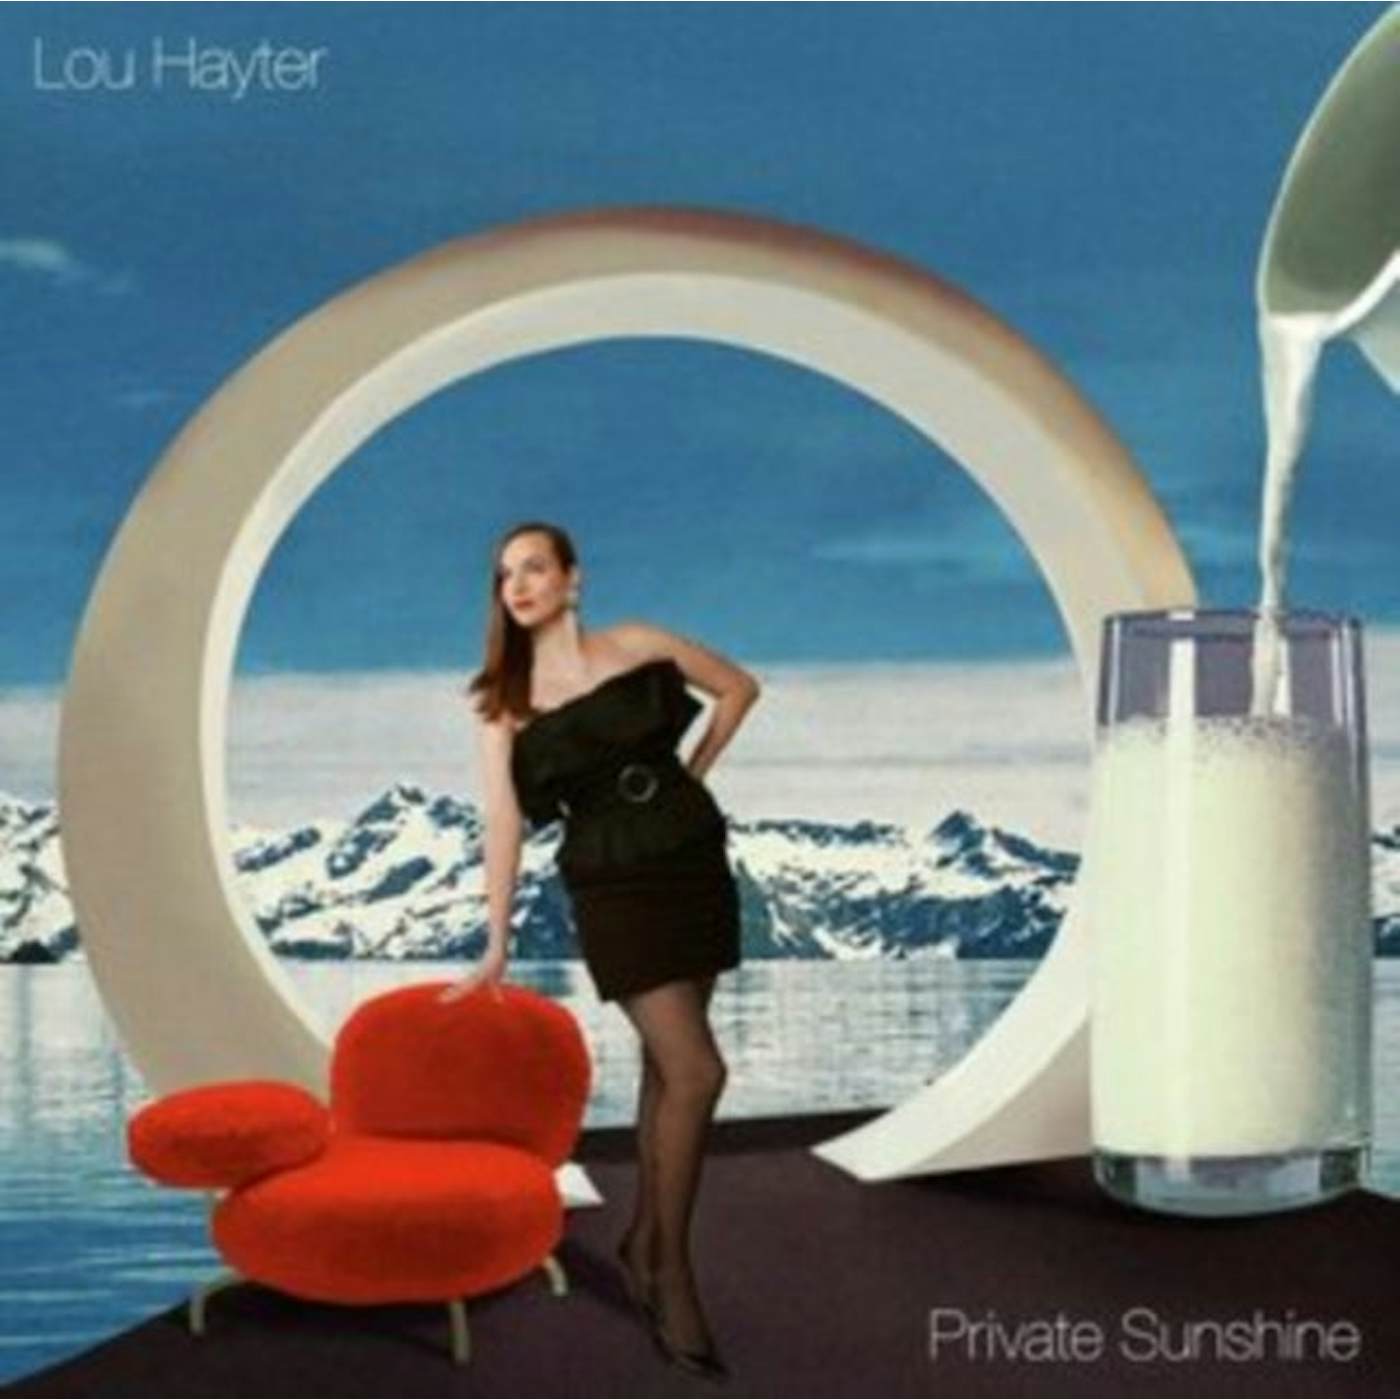 Lou Hayter LP Vinyl Record - Private Sunshine